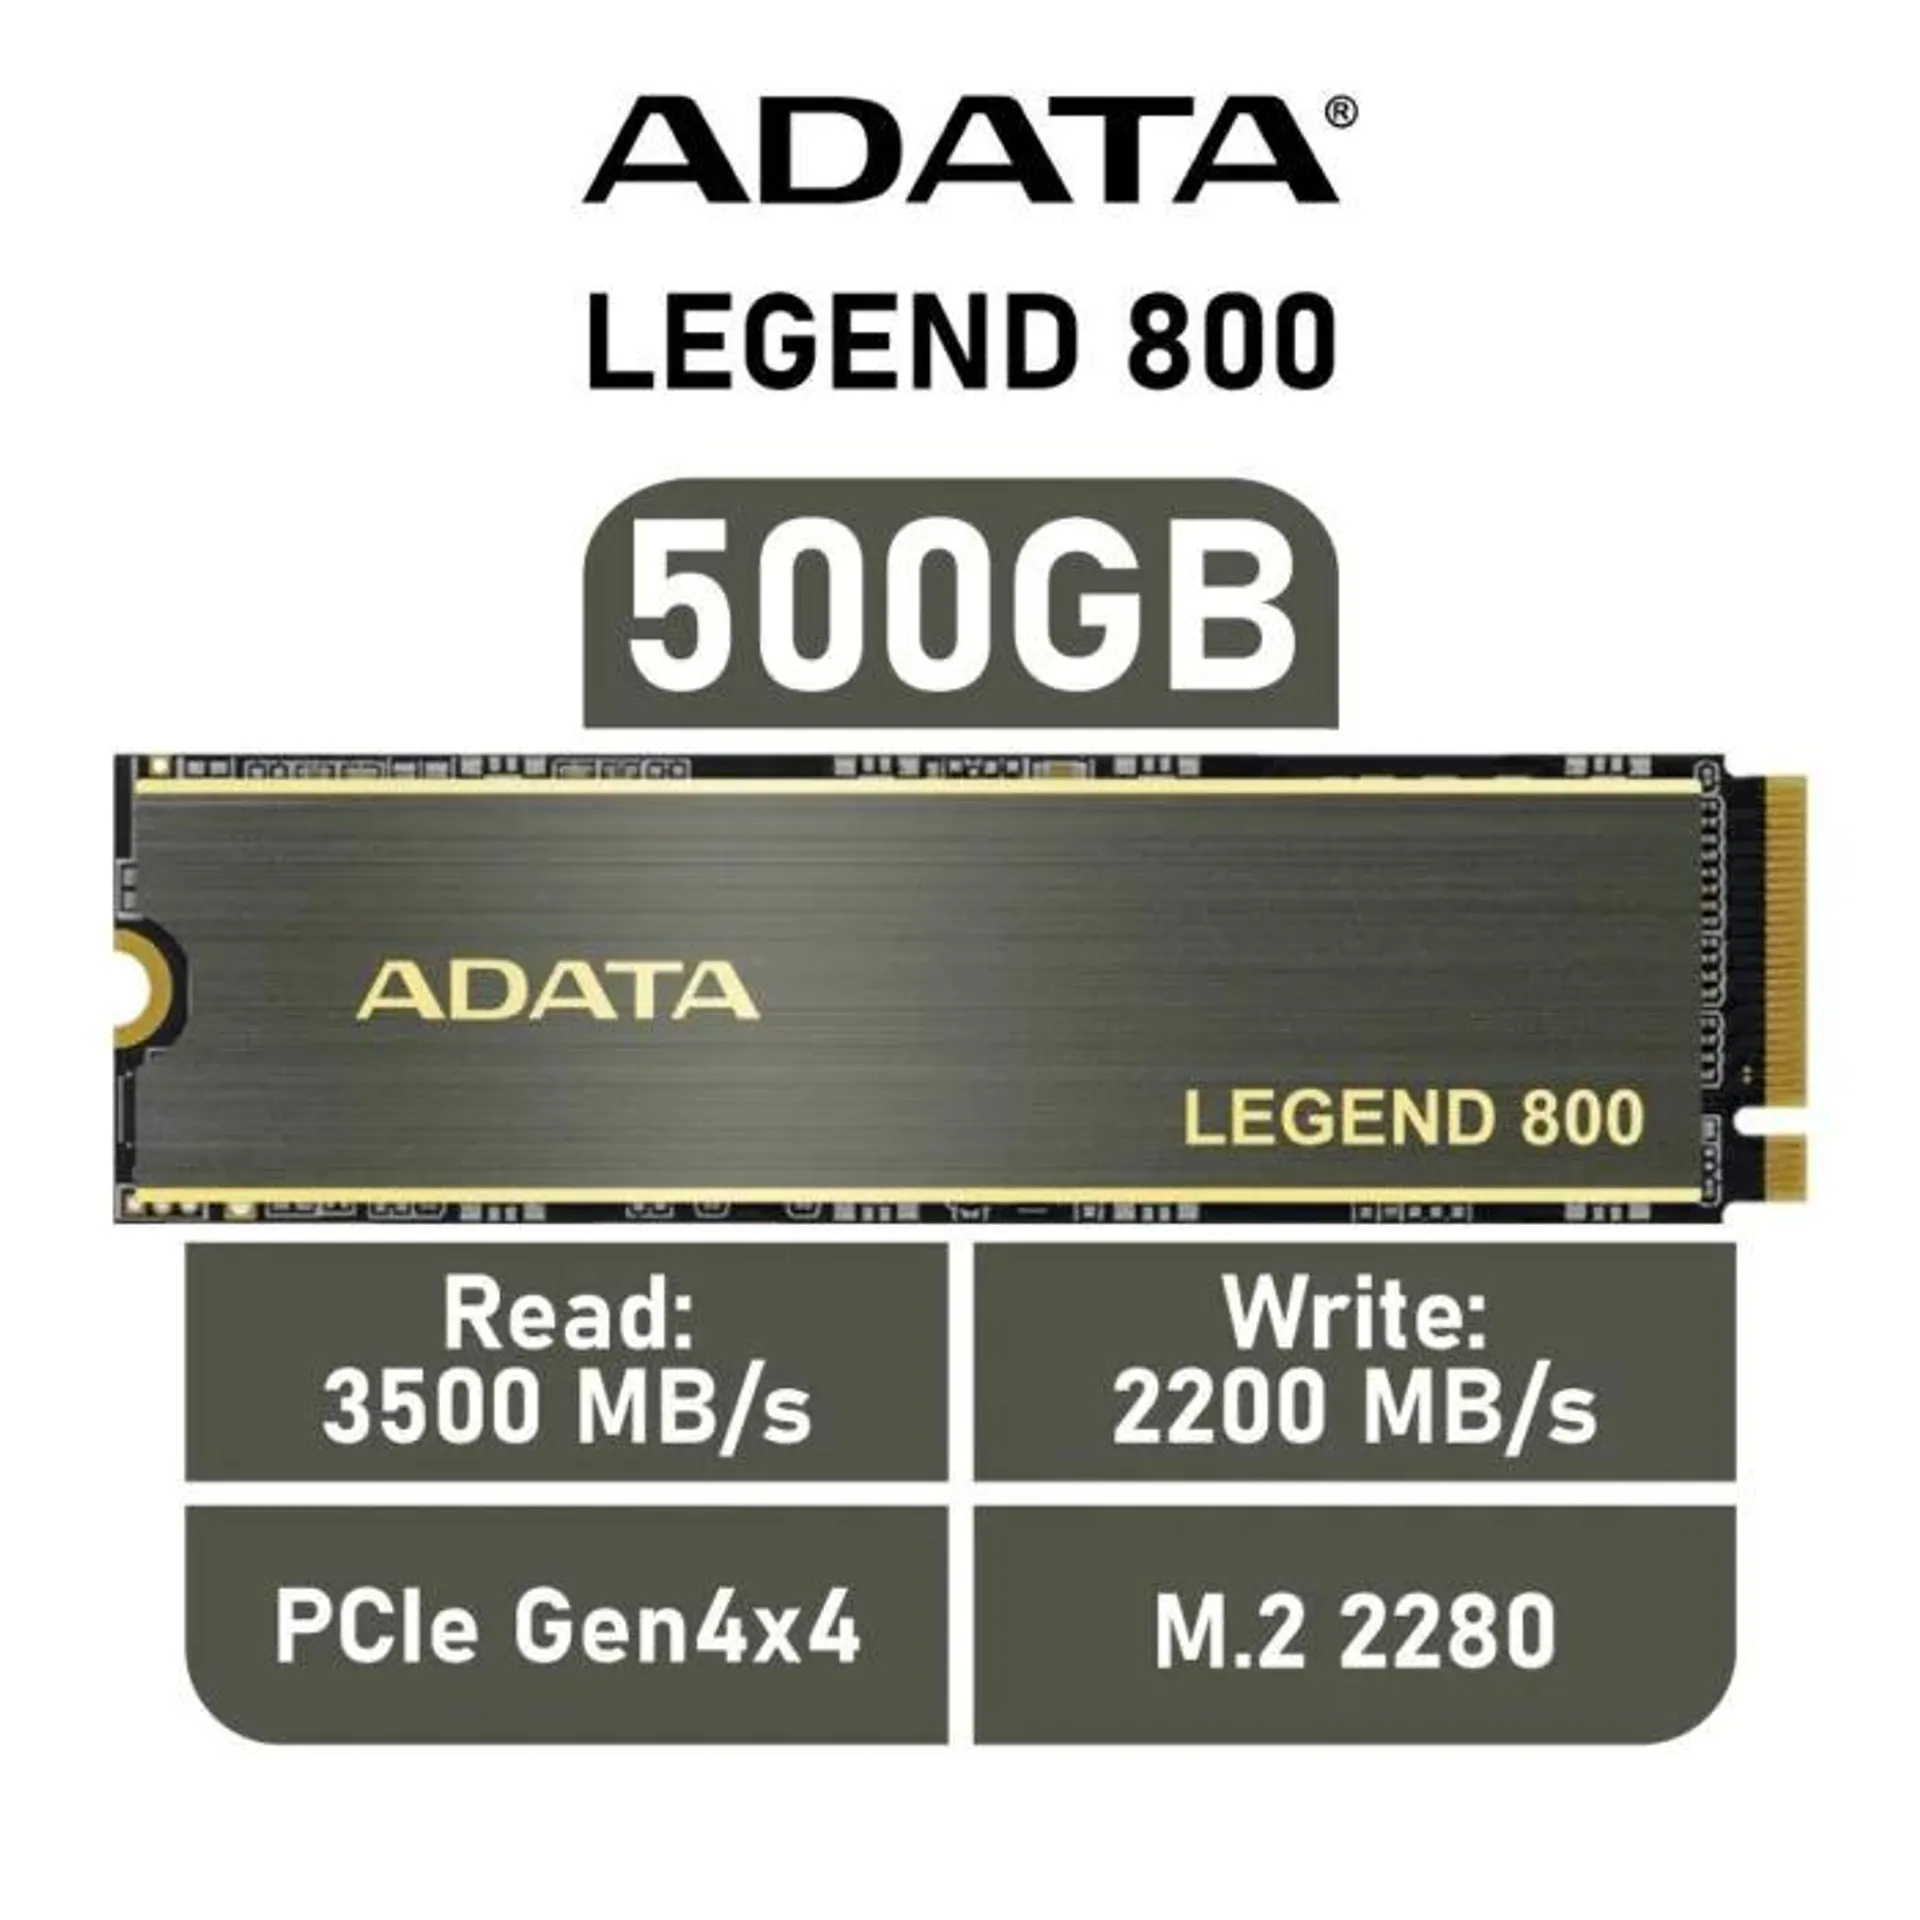 ADATA LEGEND 800 500GB PCIe Gen4x4 ALEG-800-500GCS M.2 2280 Solid State Drive